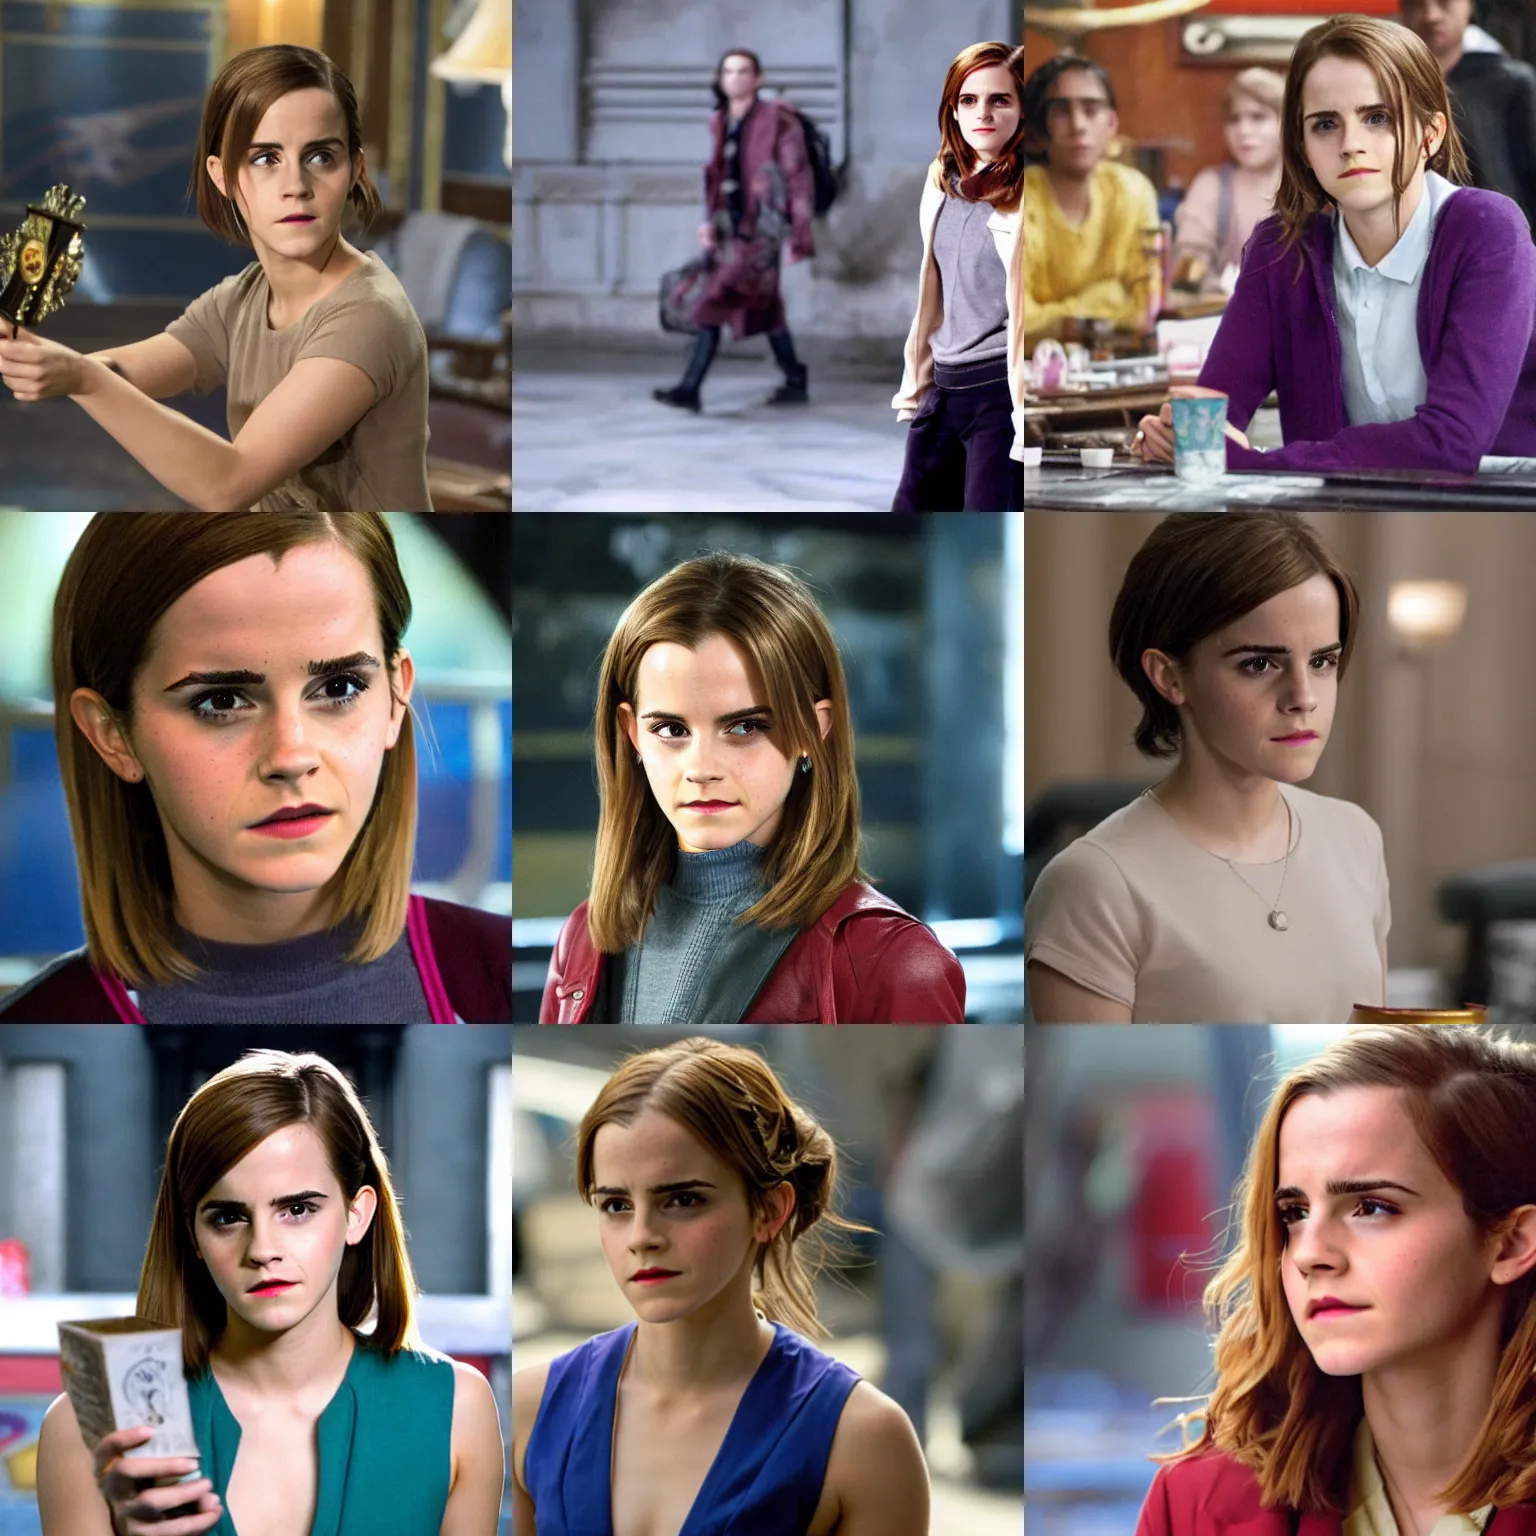 Prompt: Movie still of Emma Watson in Yu-Gi-Oh